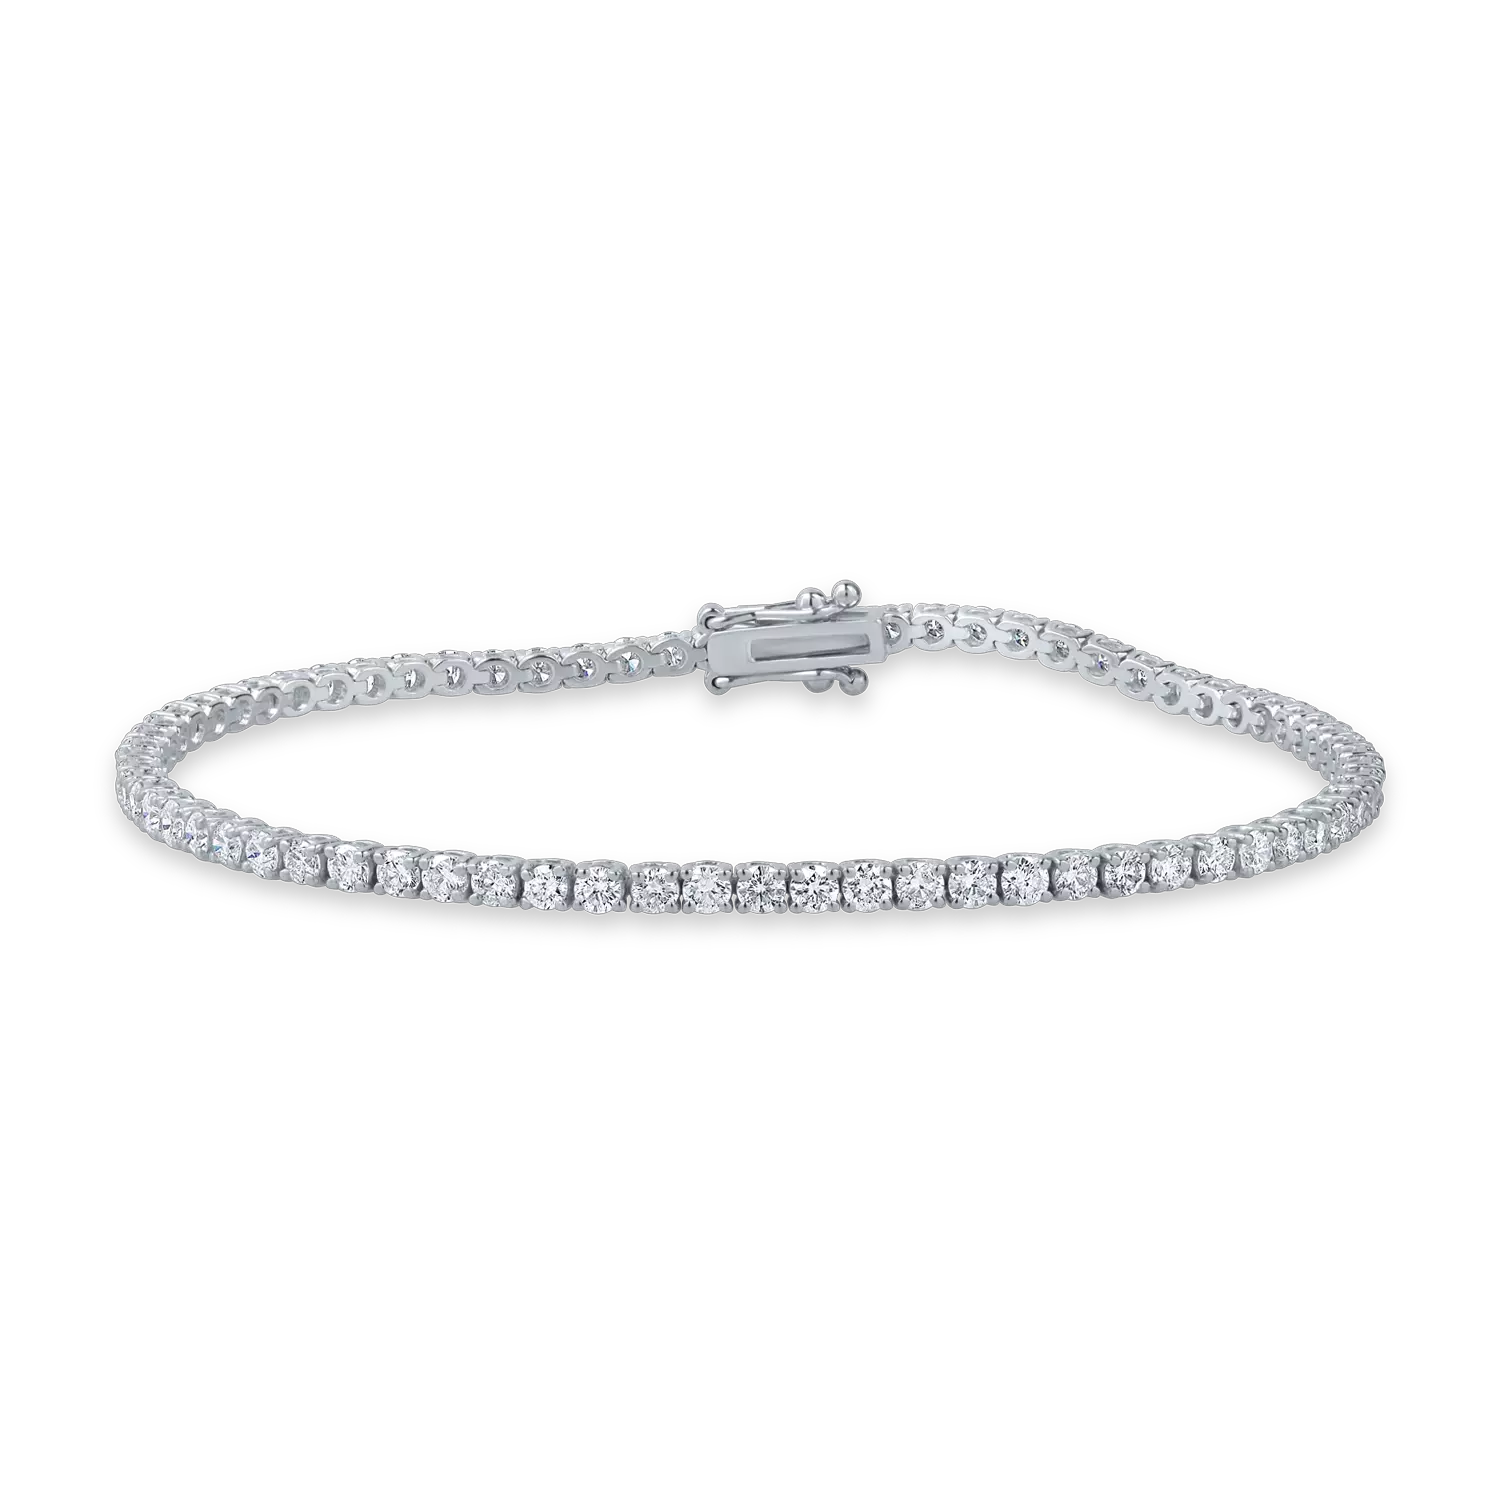 White gold tennis bracelet with 3ct diamonds